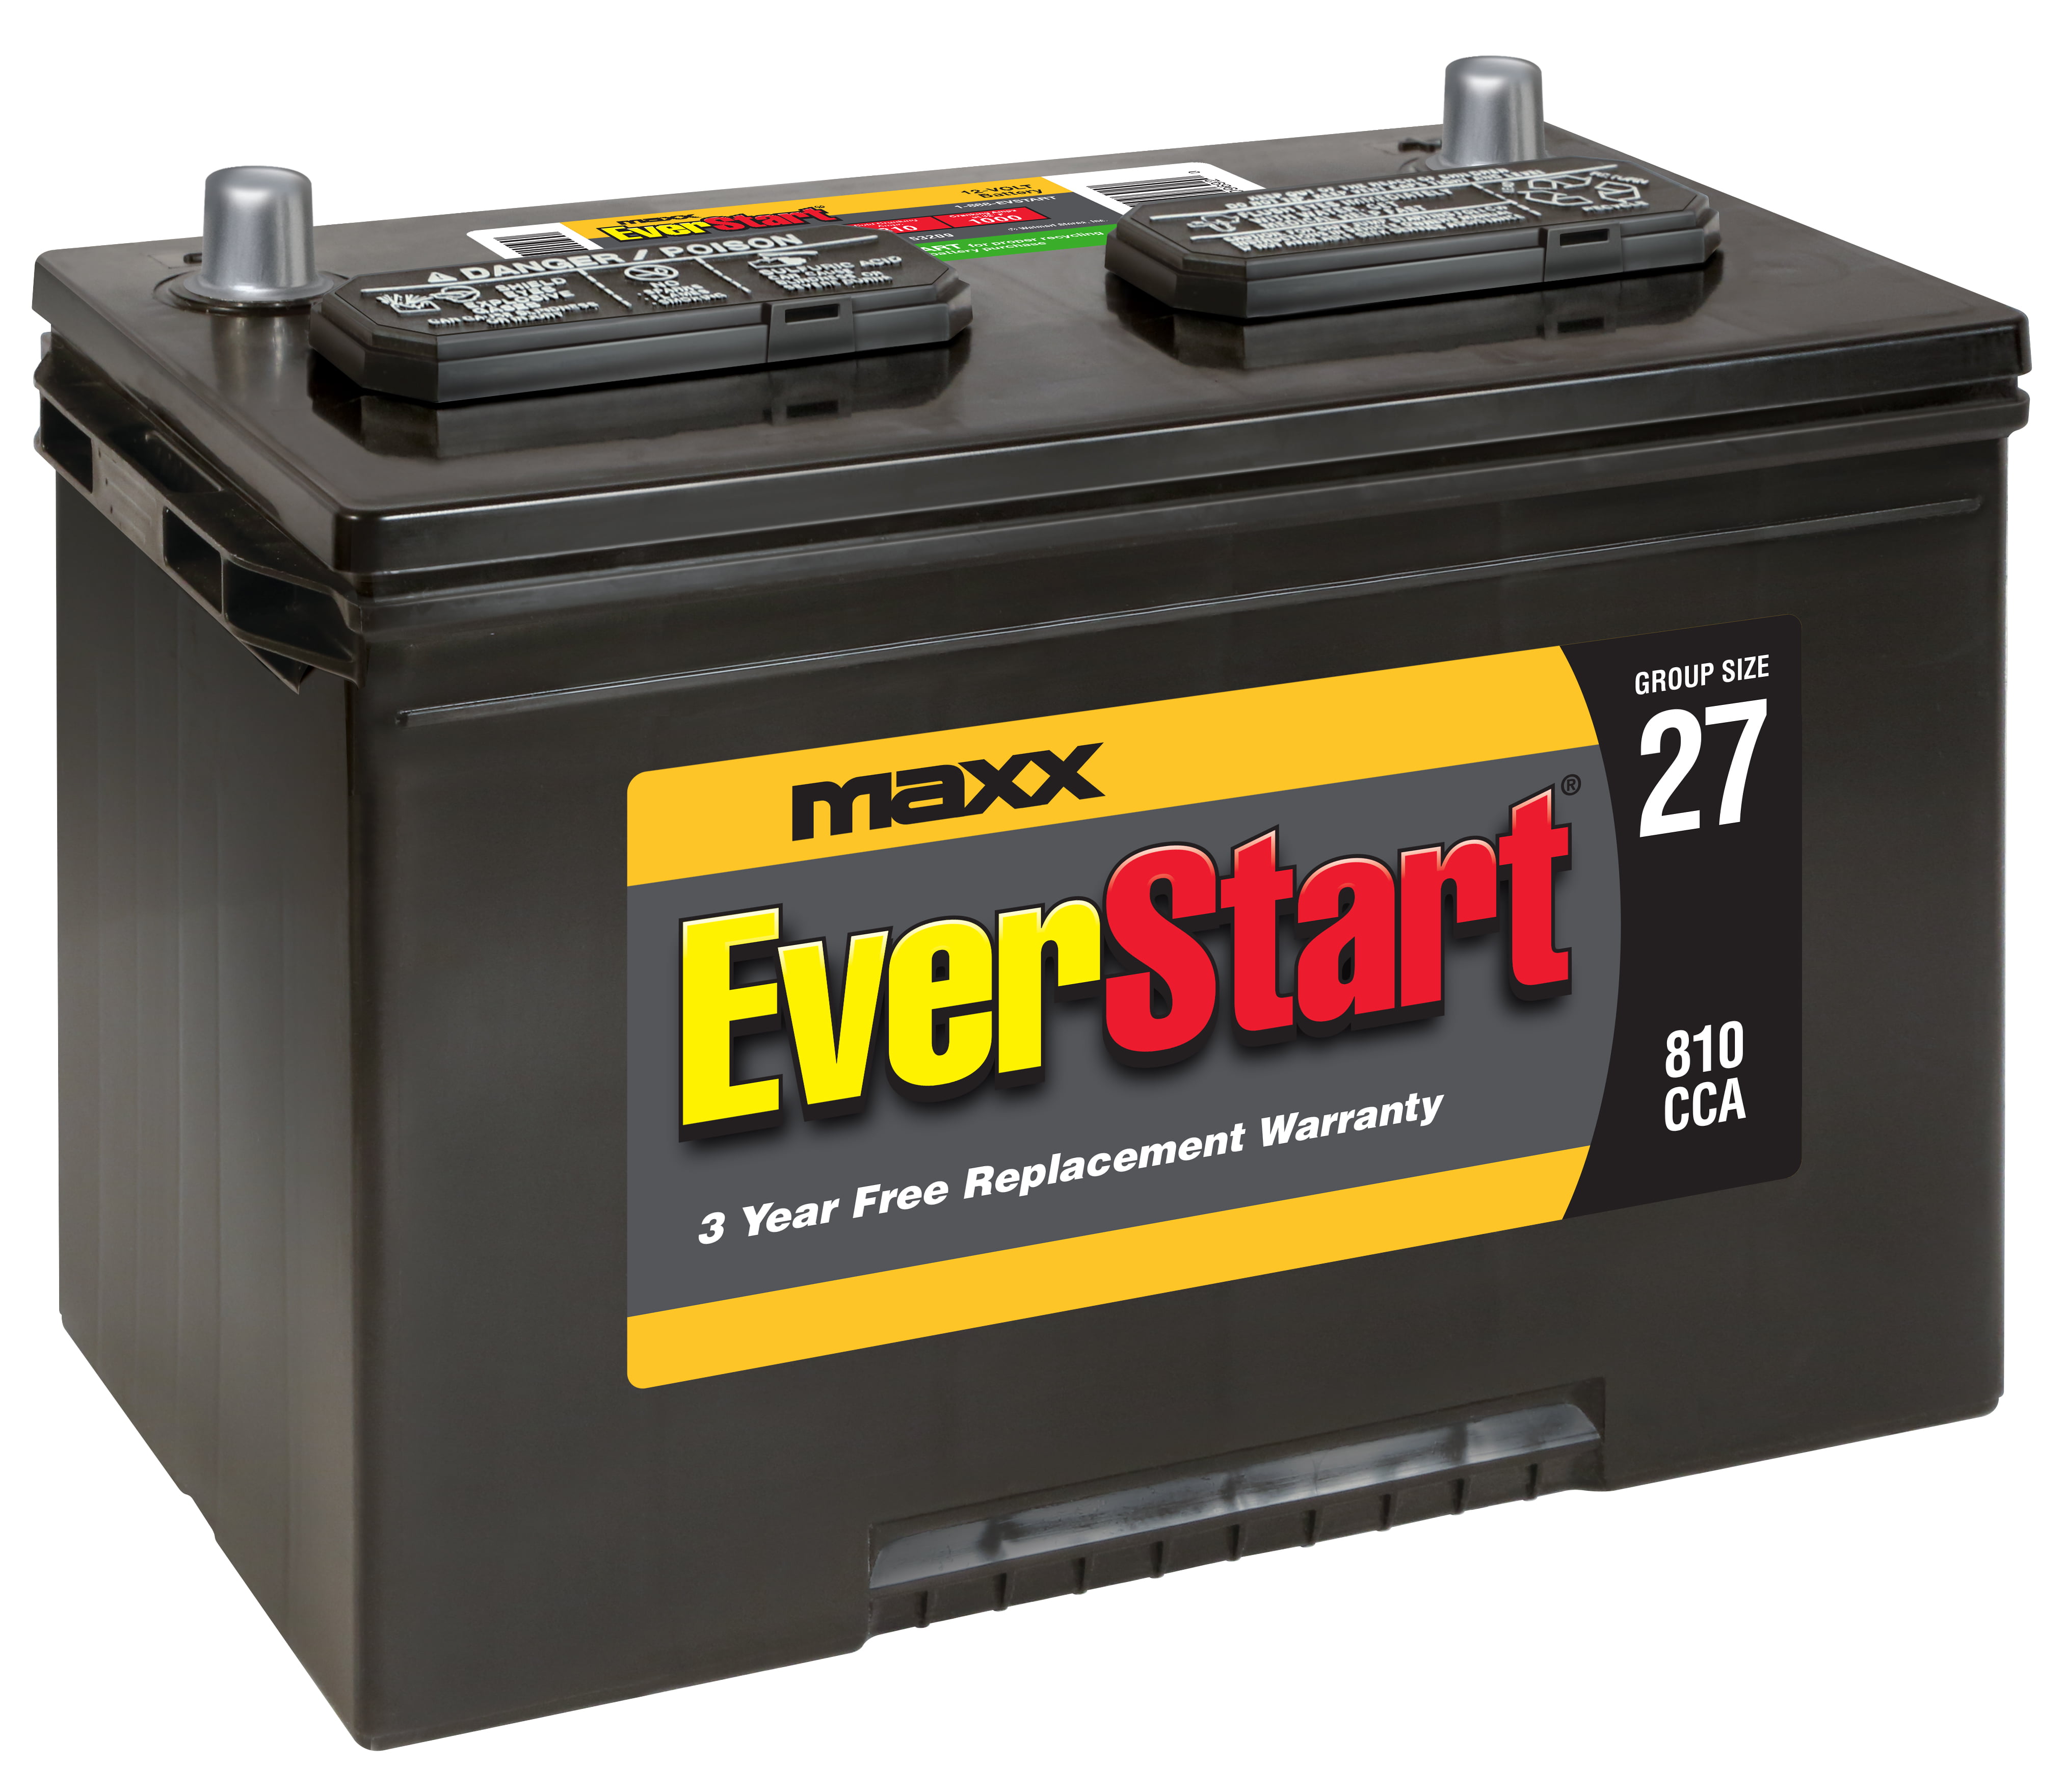 EverStart Maxx Lead Acid Automotive Battery, Group Size 27 Walmart